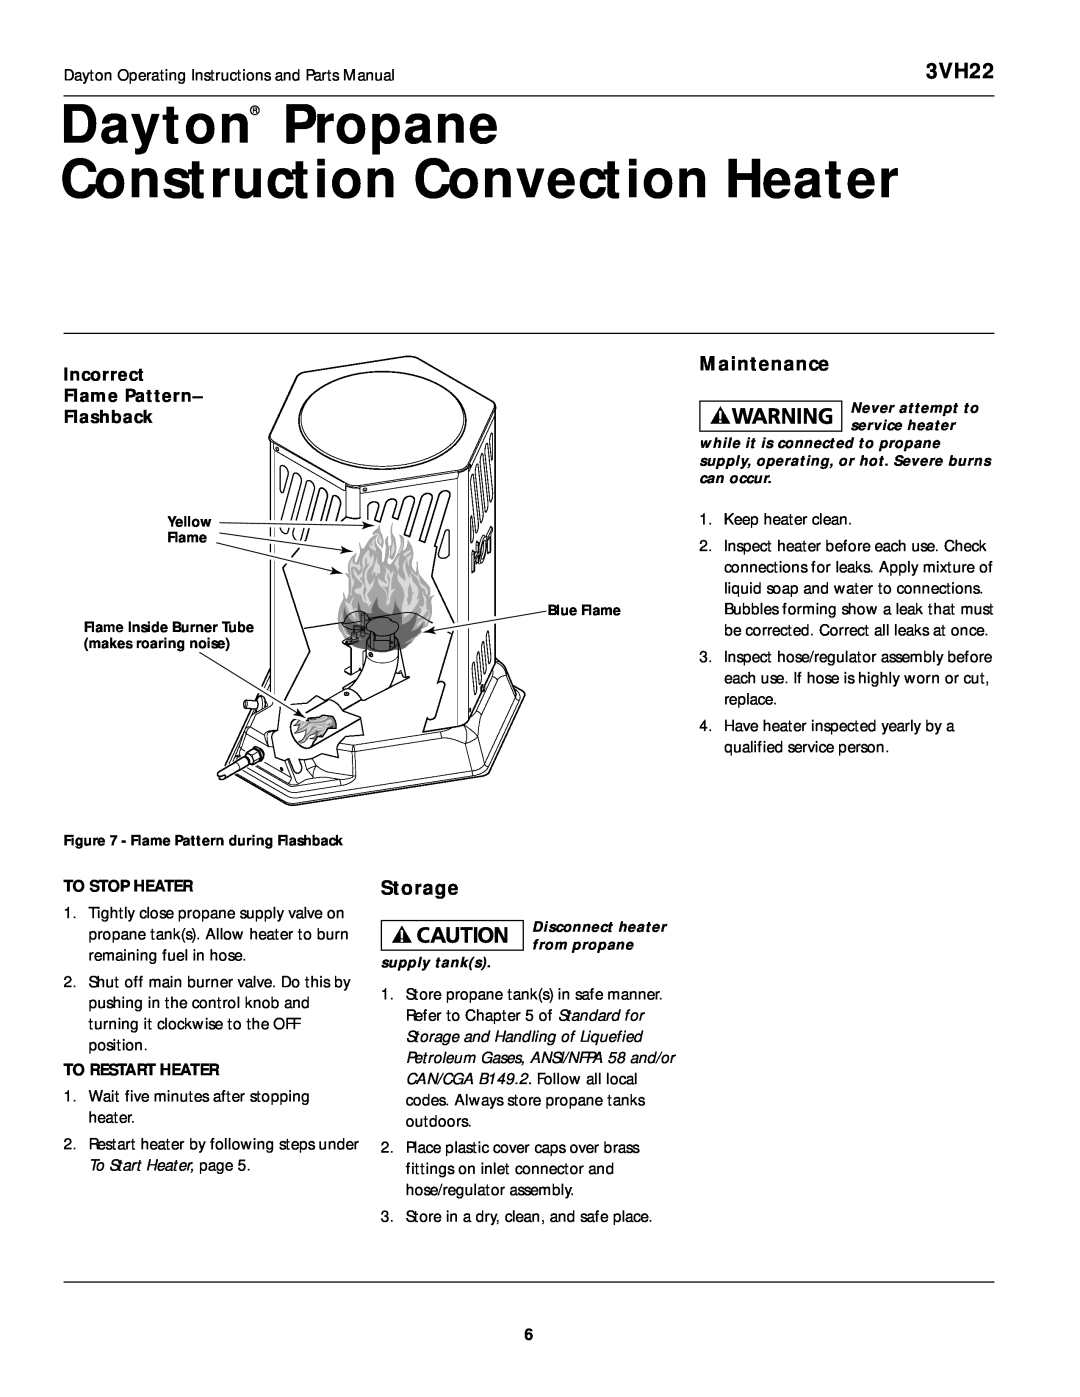 Desa 3VH22 Dayton Propane Construction Convection Heater, Maintenance, Storage, Incorrect Flame Pattern- Flashback 